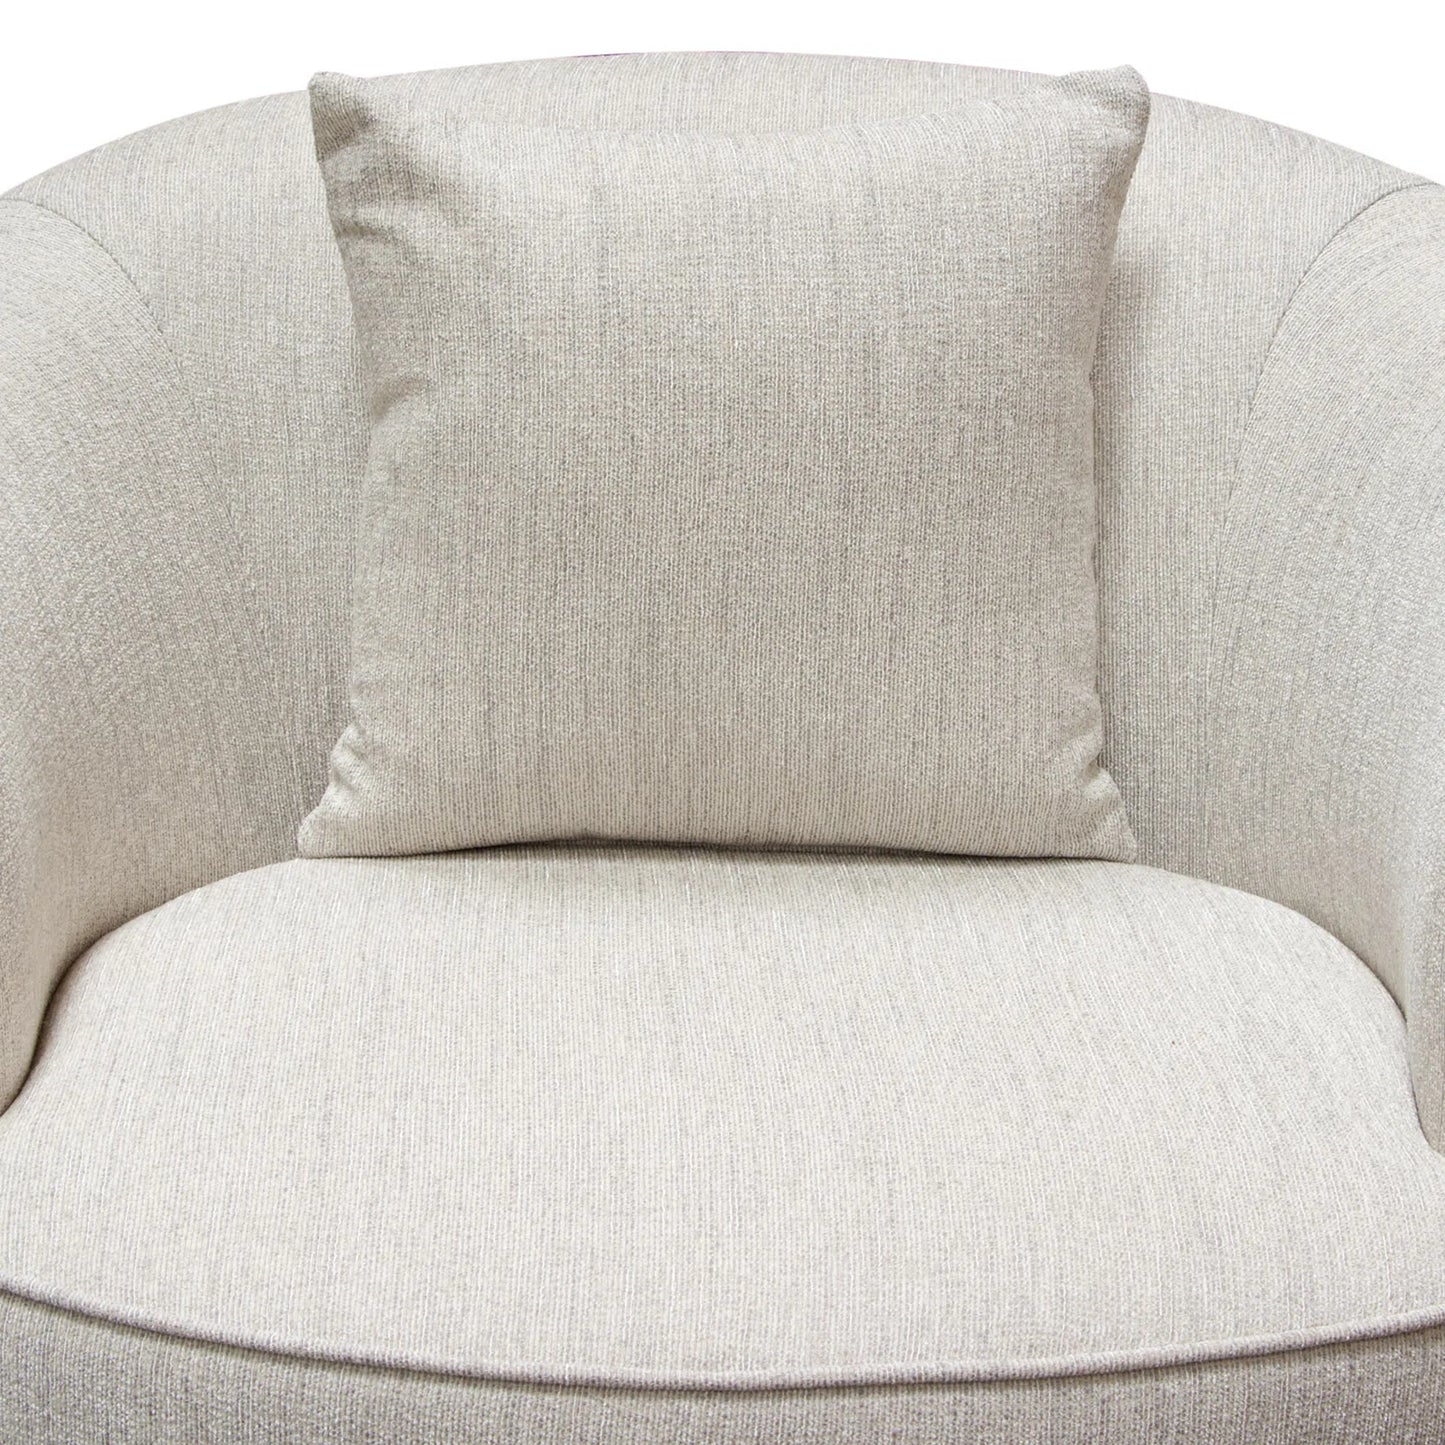 Raven Upholstered Armchair in Light Cream Fabric or Black Velvet w/Brushed Silver Accent Trim